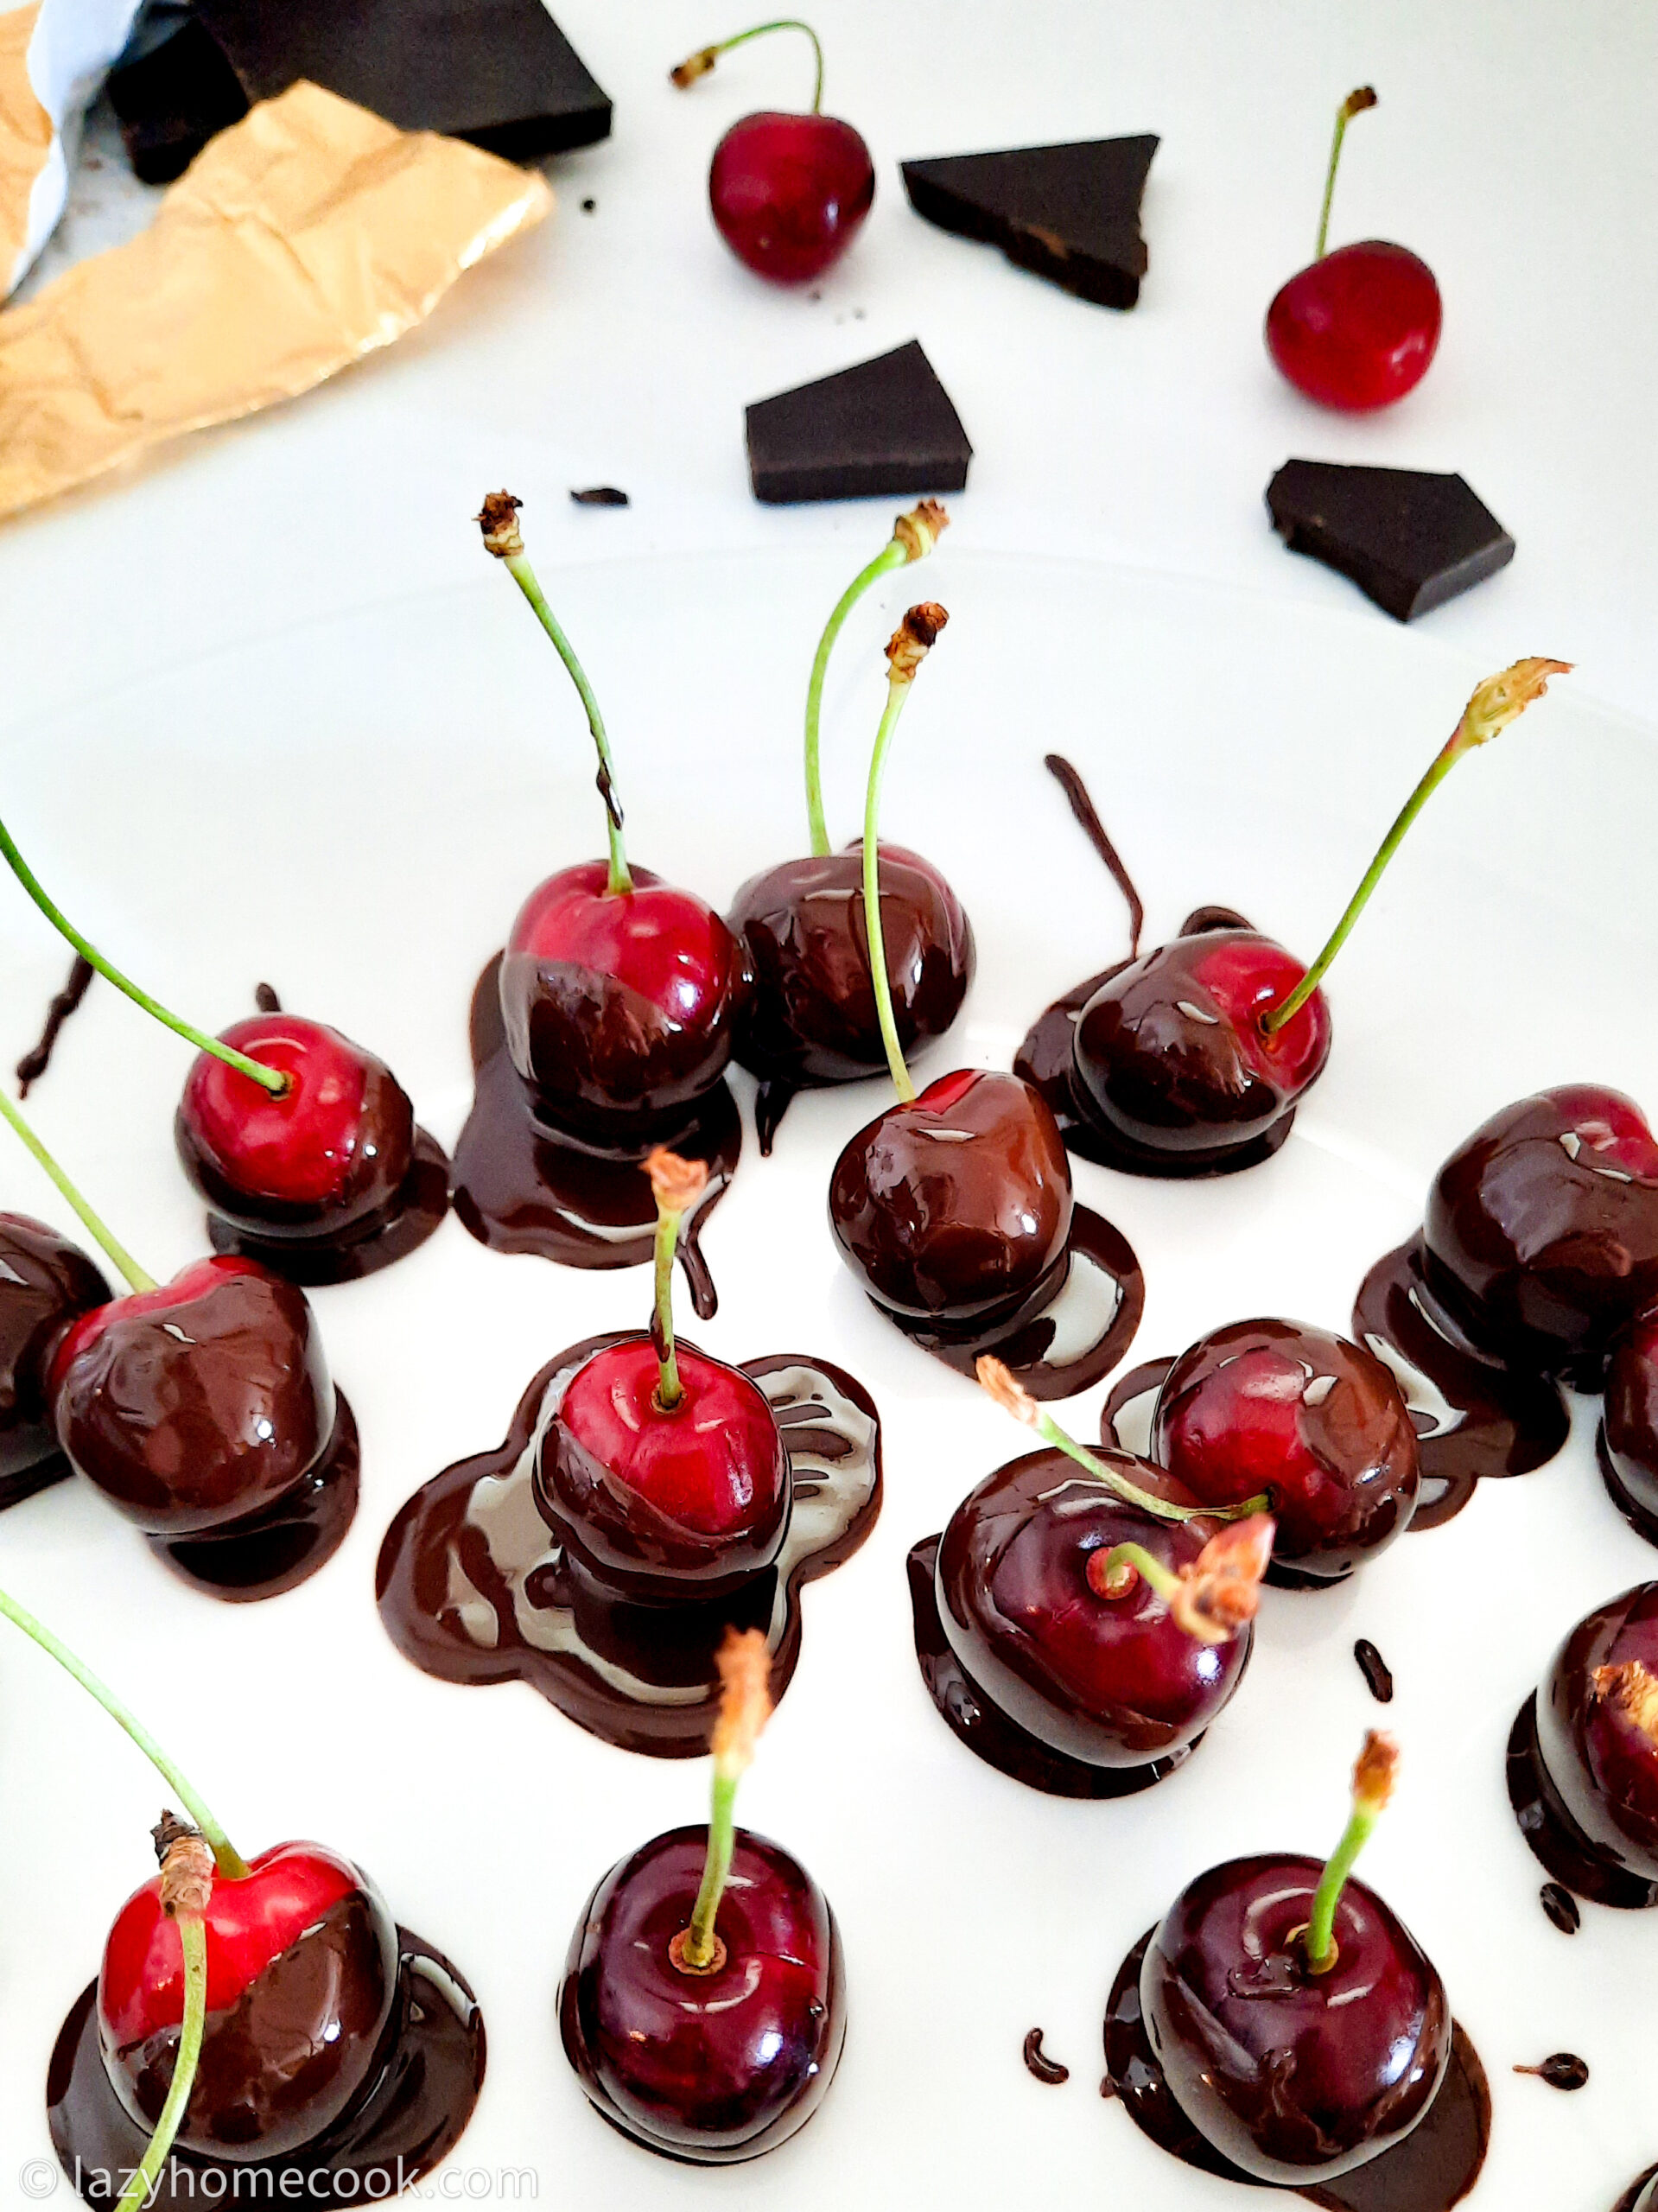 Cherries dipped in dark chocolate